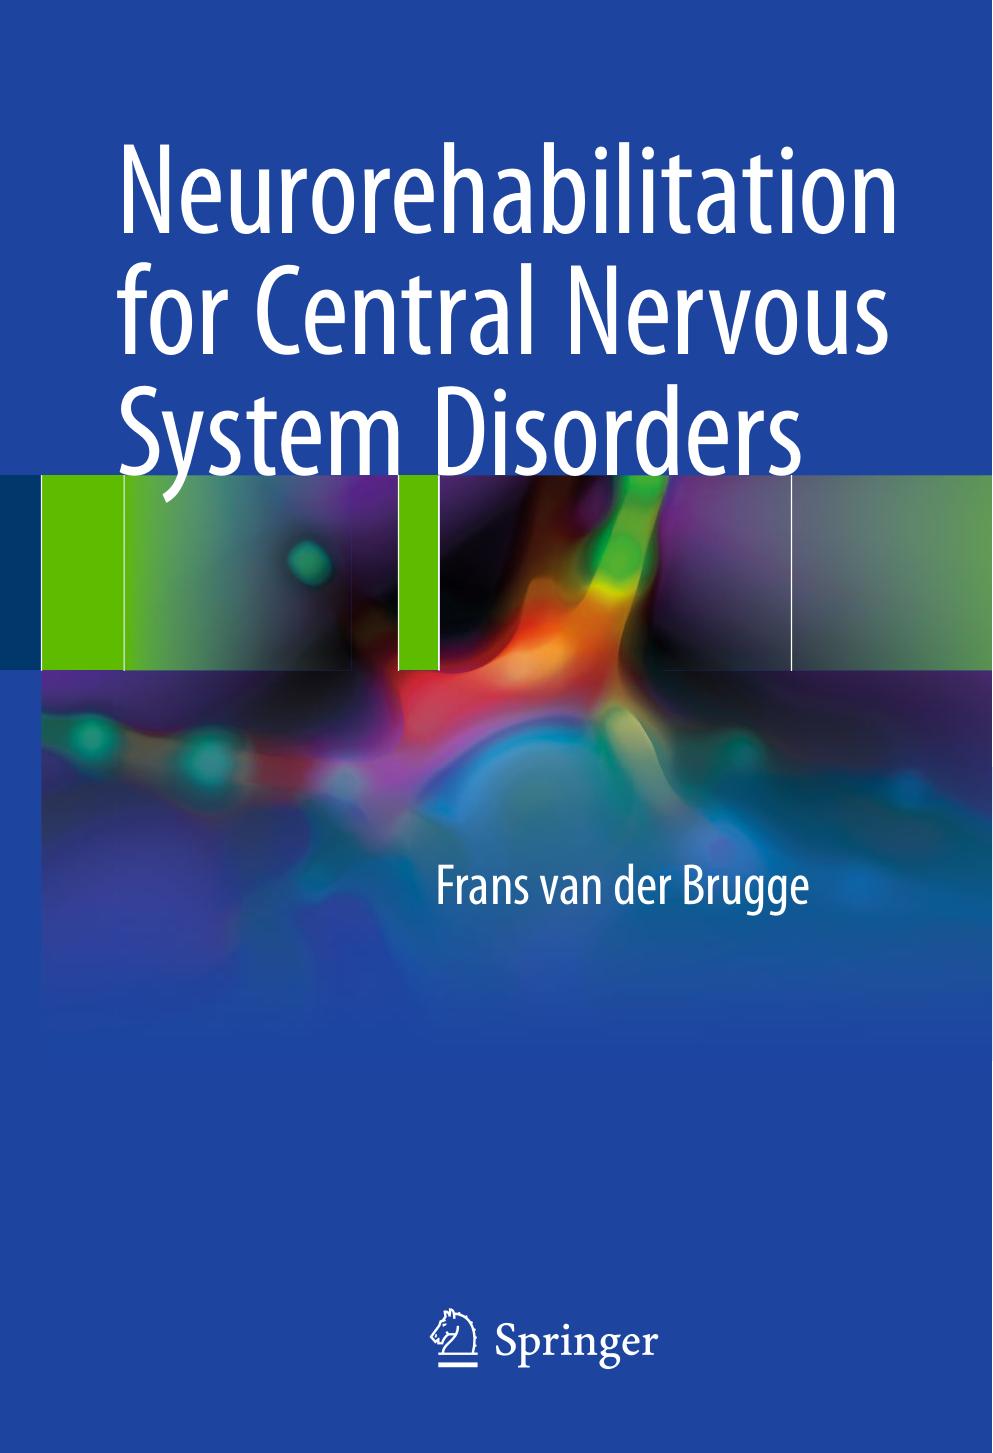 Neurorehabilitation for Central Nervous System 2018